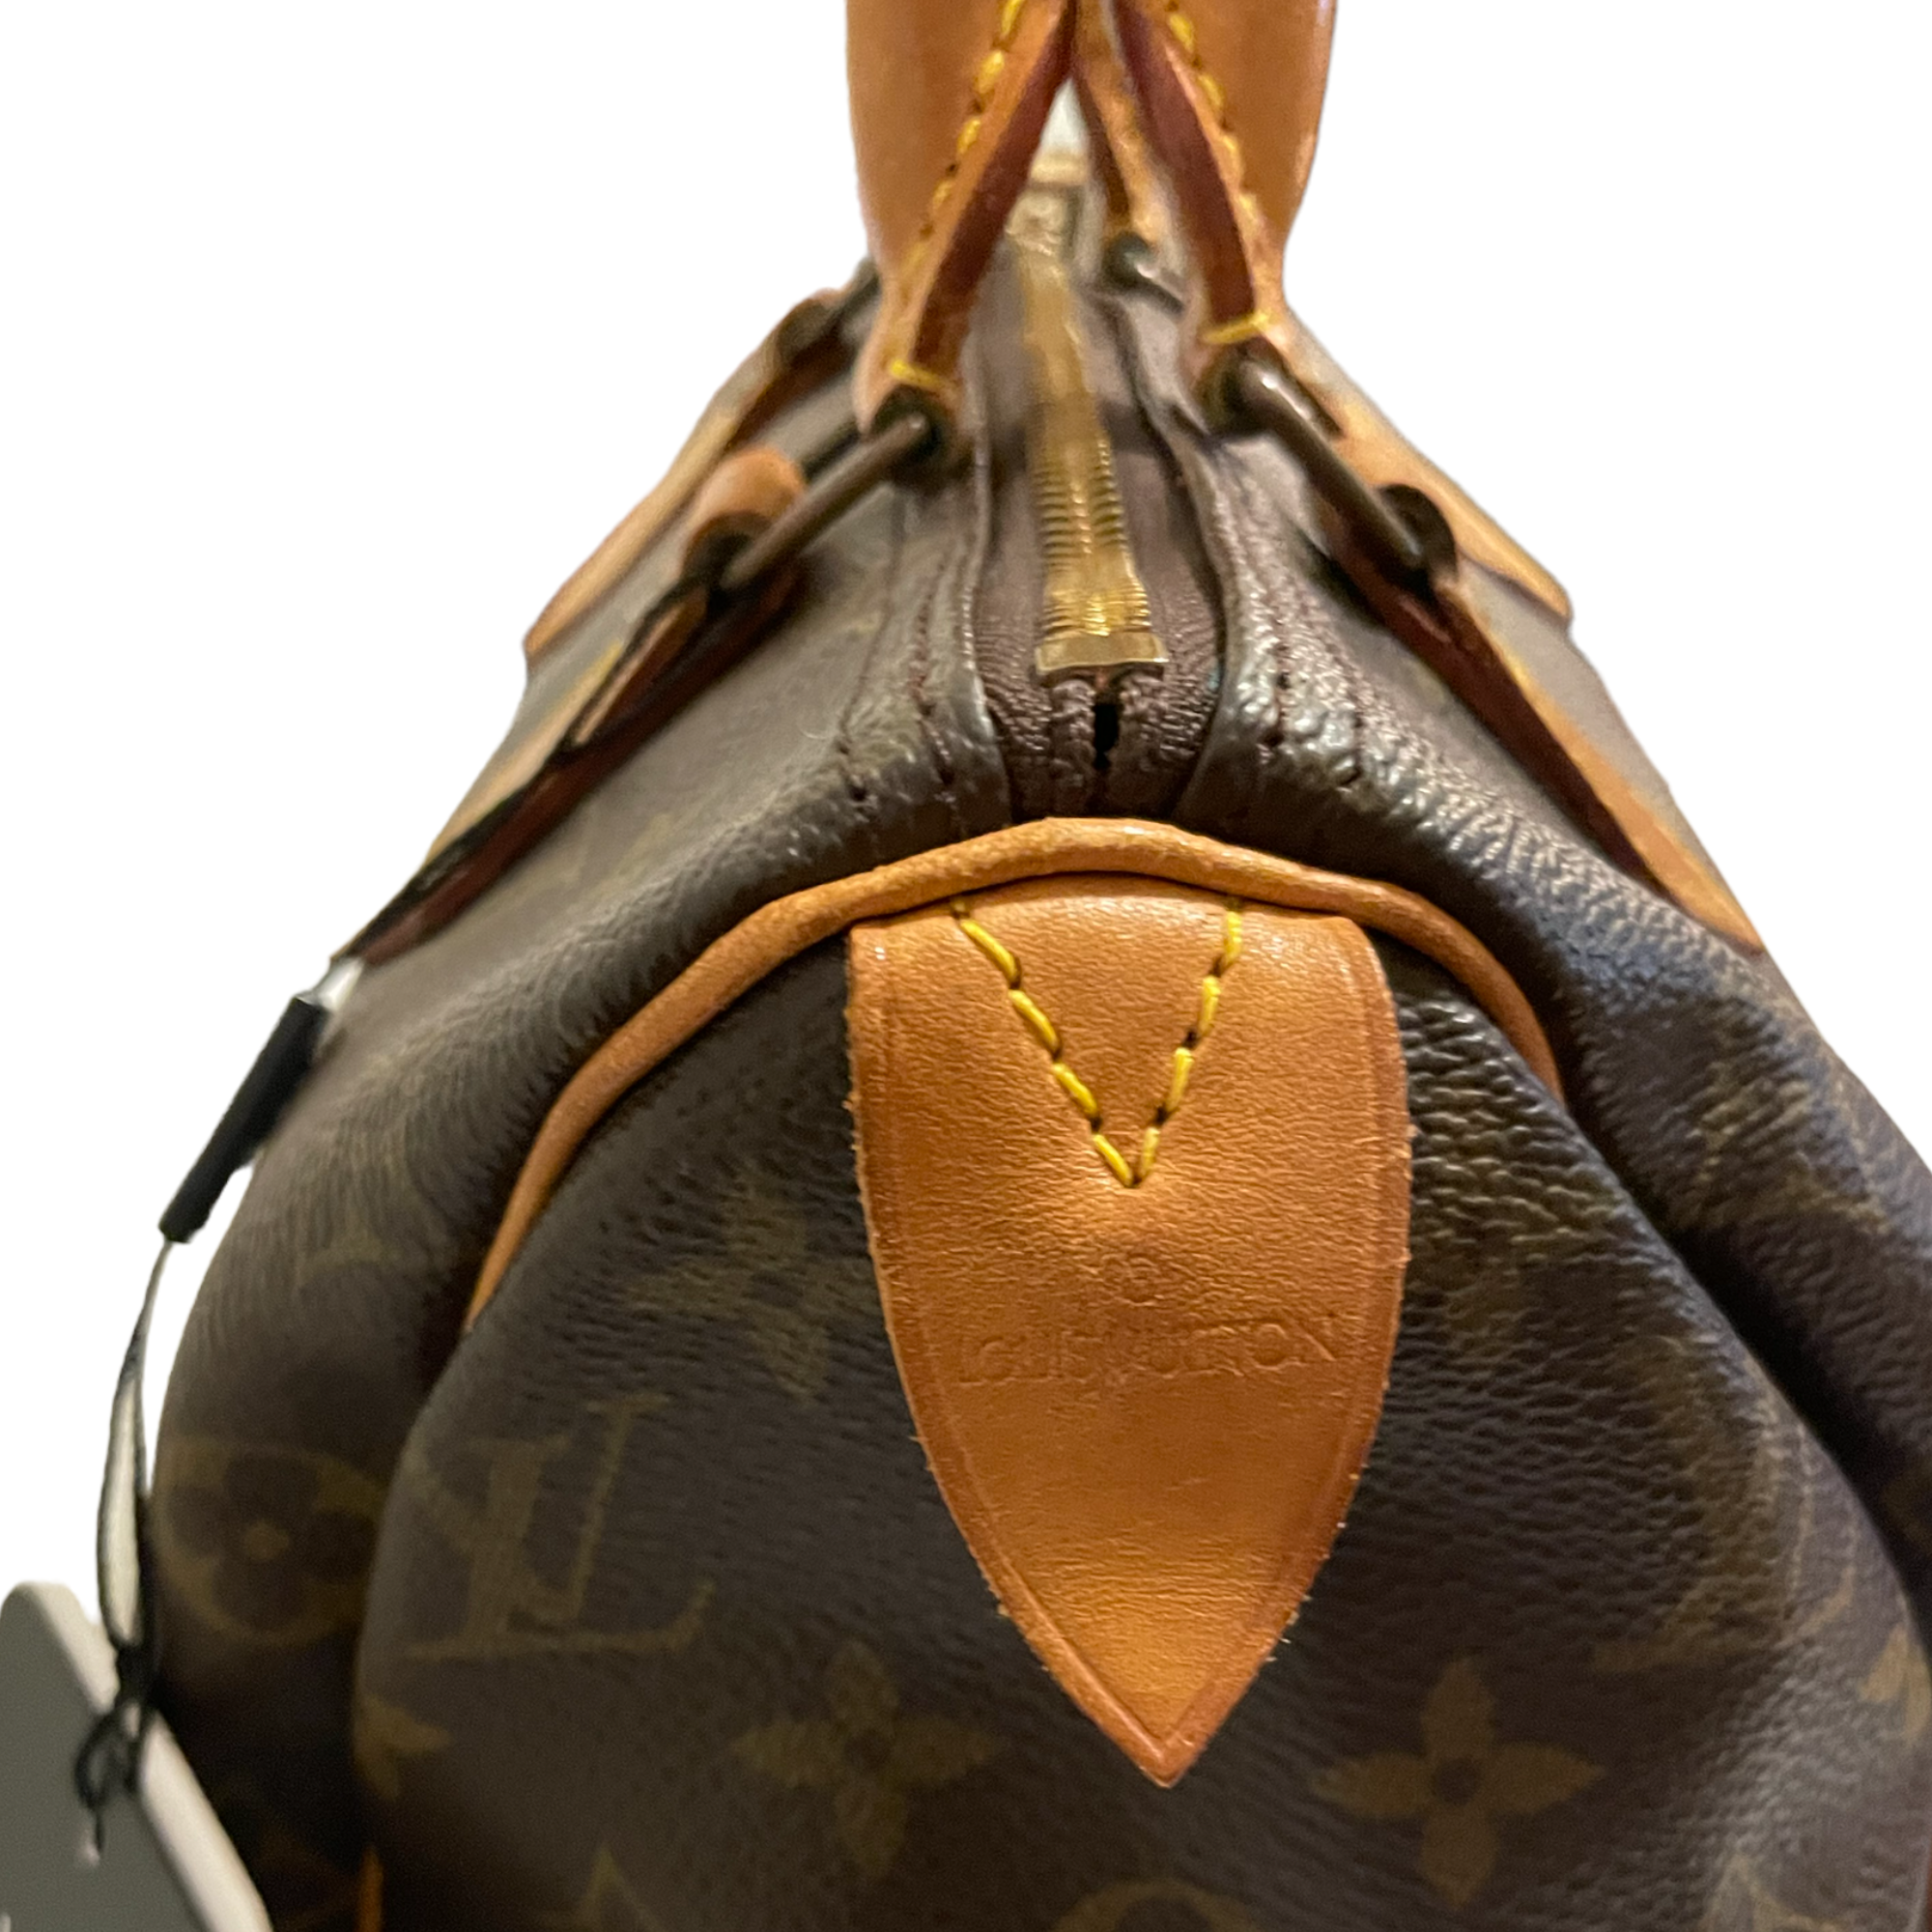 Louis Vuitton Vintage Speedy 25 handbag in iconic Monogram coated canvas & Vachetta leather trim